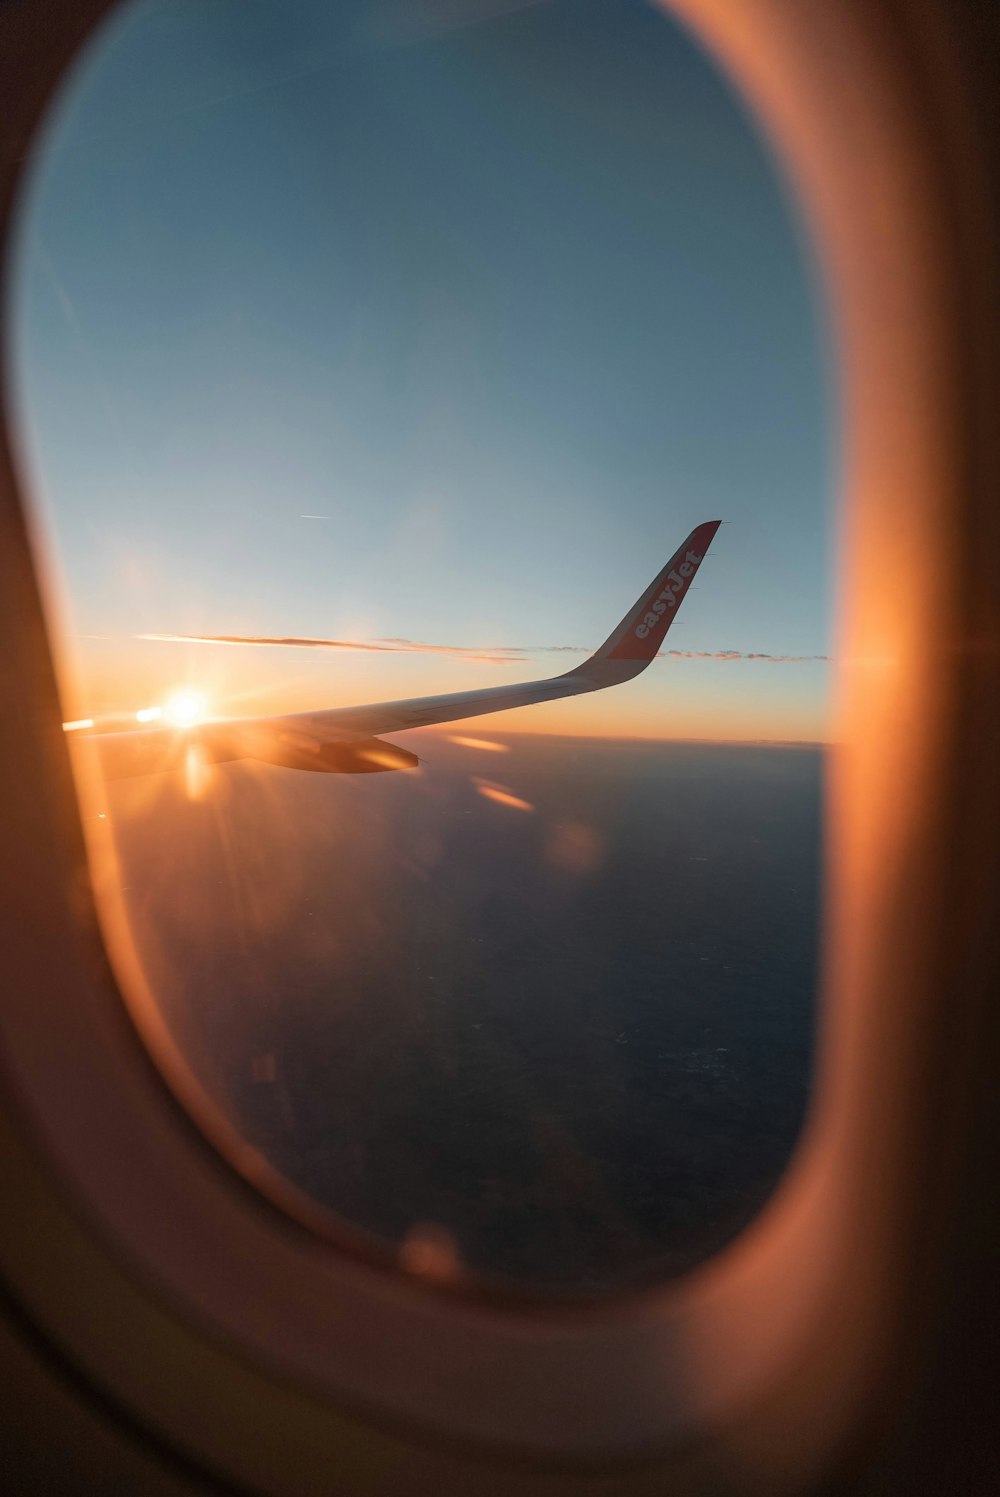 a view of the sun through an airplane window